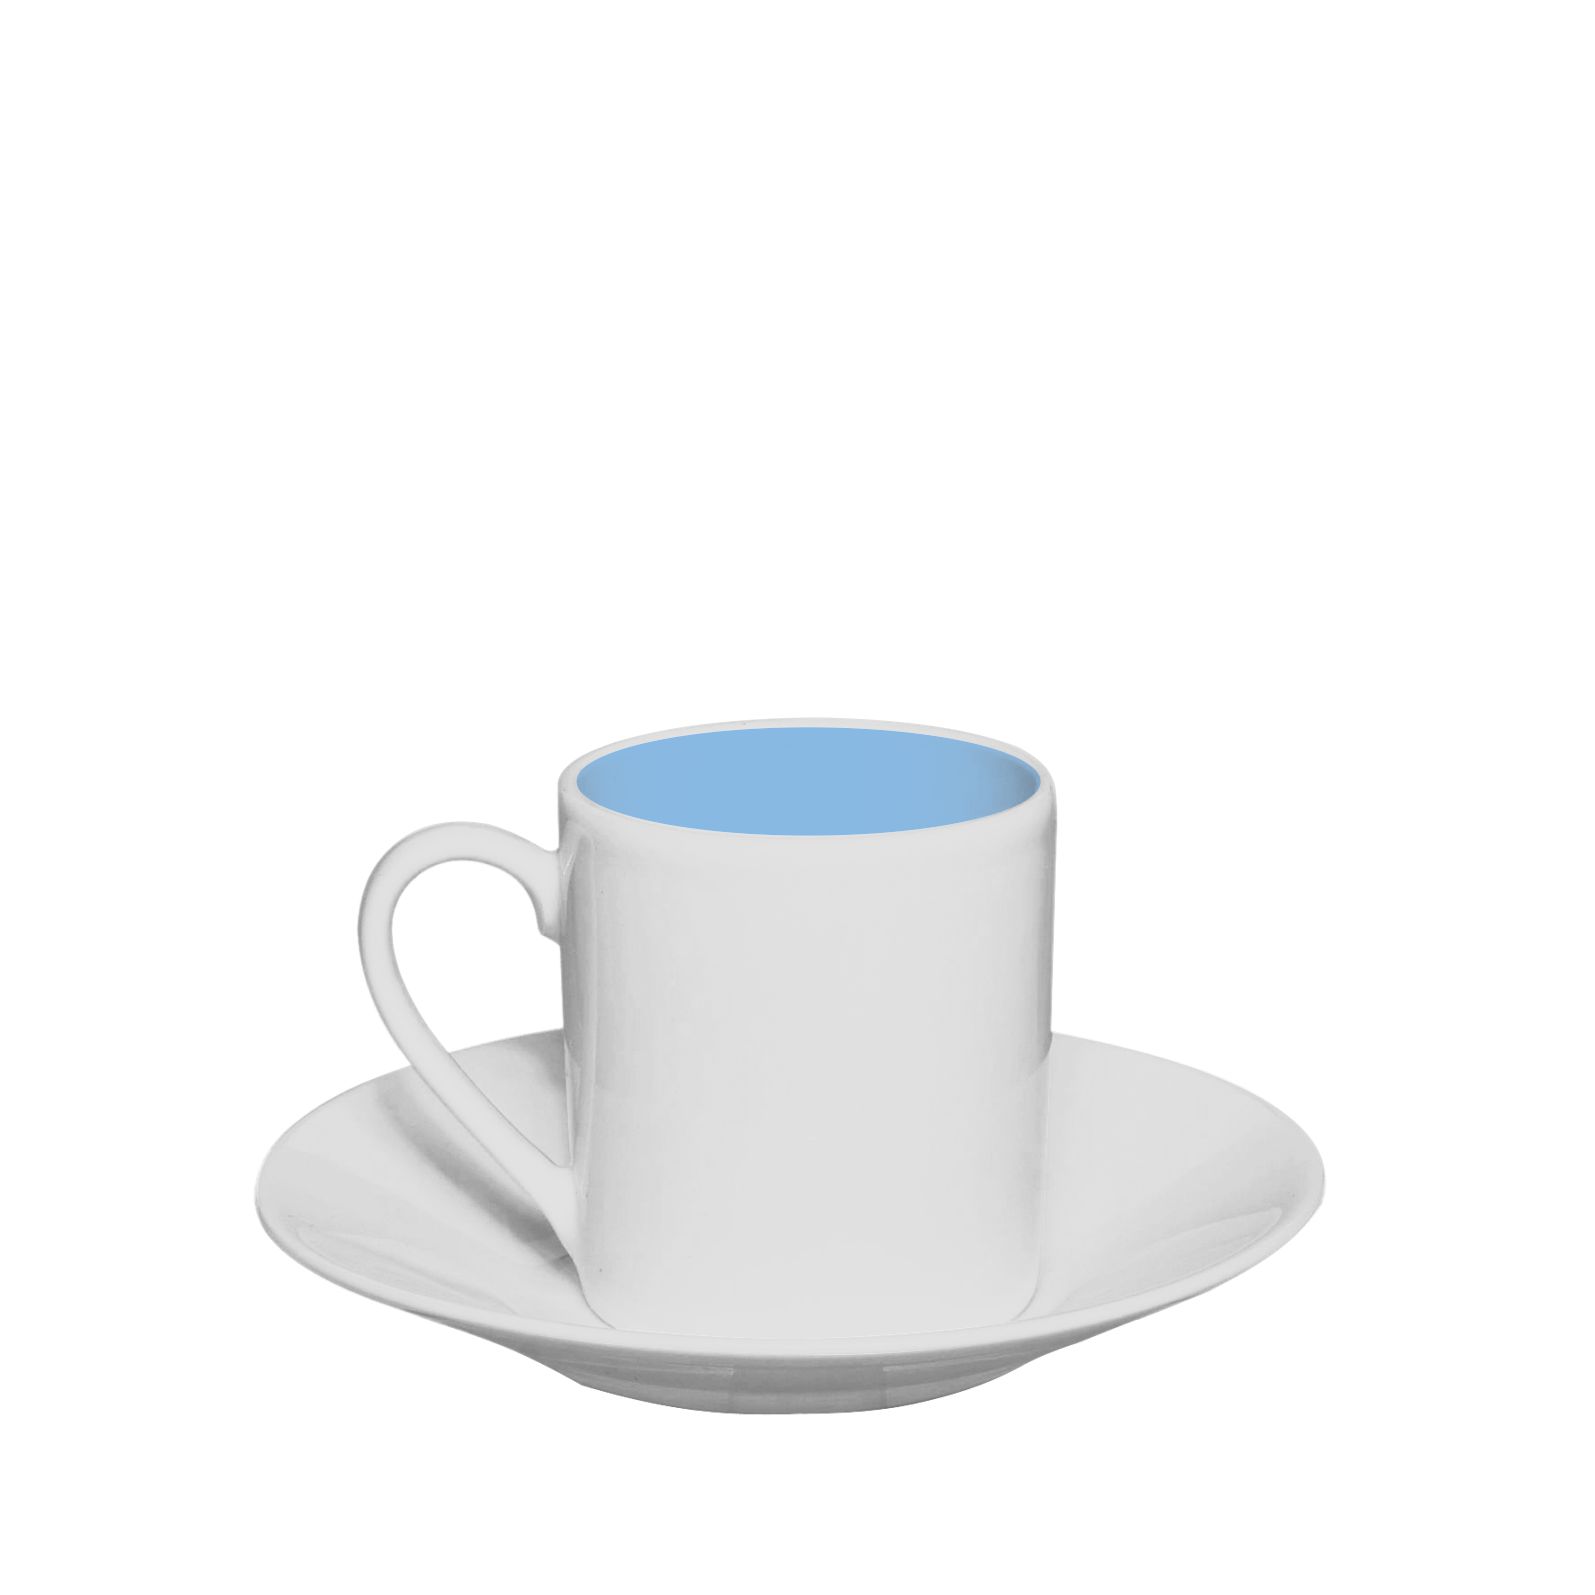 /sites/default/files/2020-03/Fili%C5%BCanka_classic_espresso_white-blue.jpg